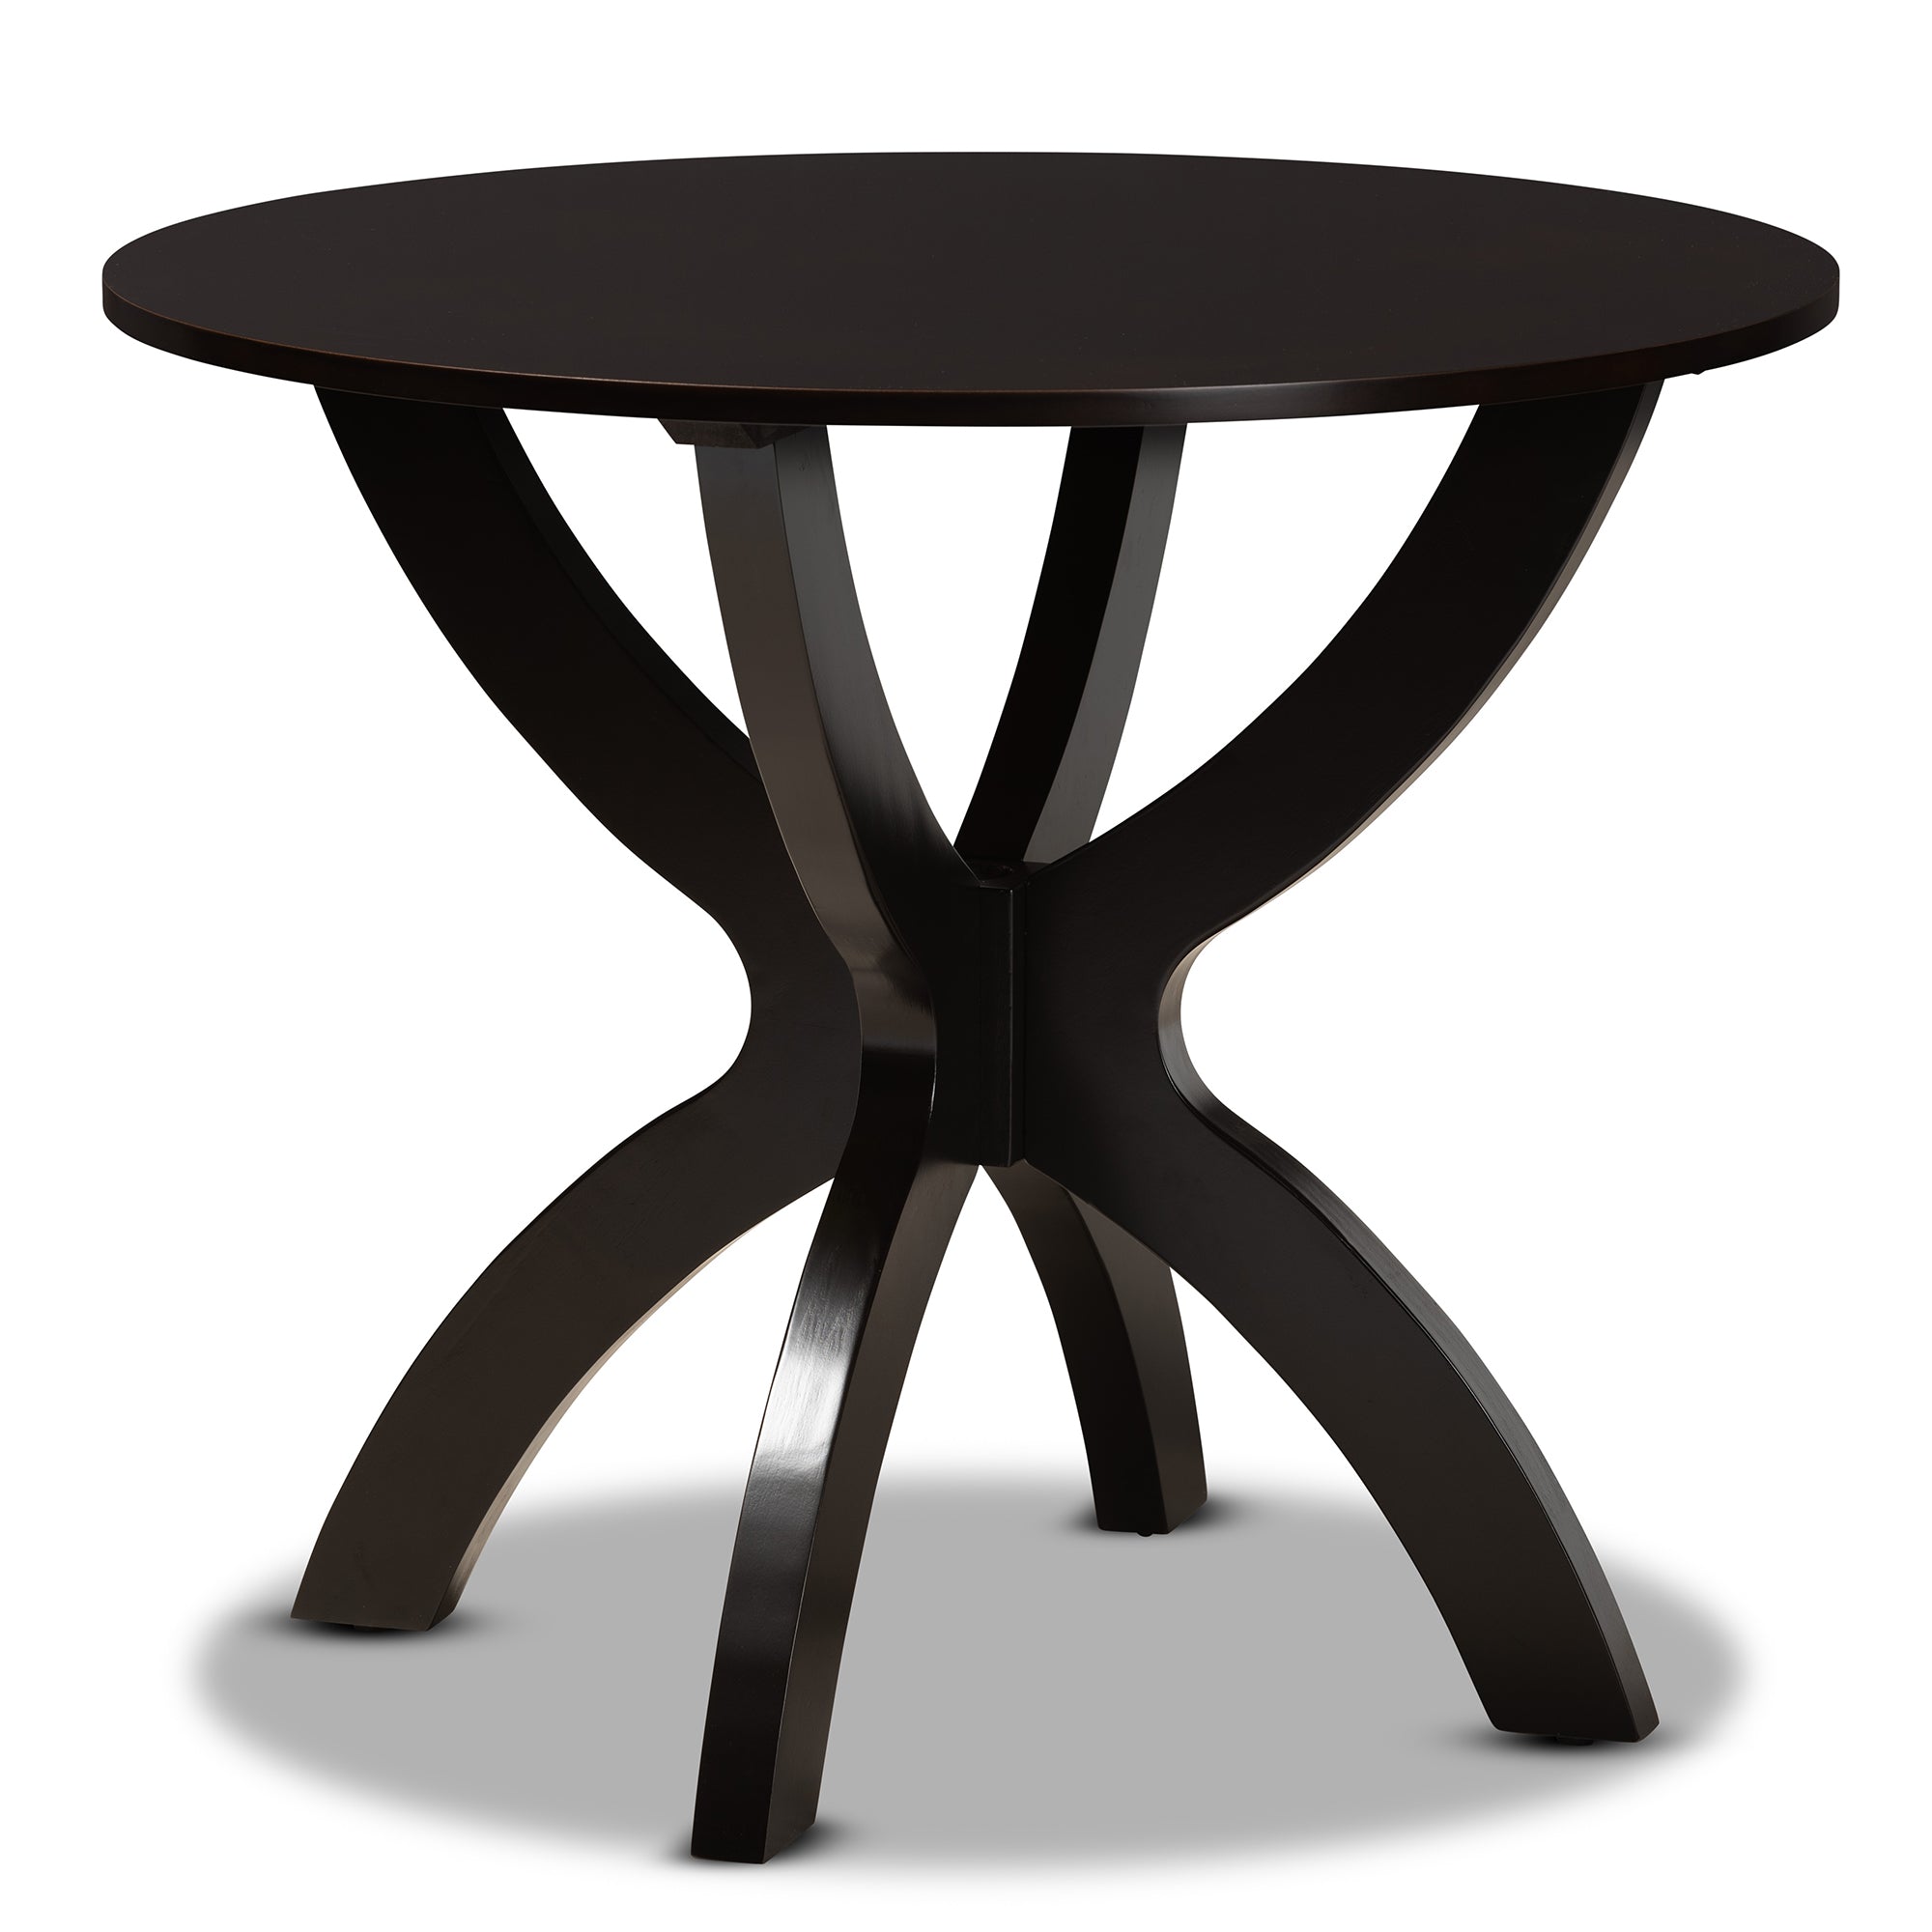 Wanda Modern Dining Table & Dining Chairs Two-Tone 5-Piece-Dining Set-Baxton Studio - WI-Wall2Wall Furnishings